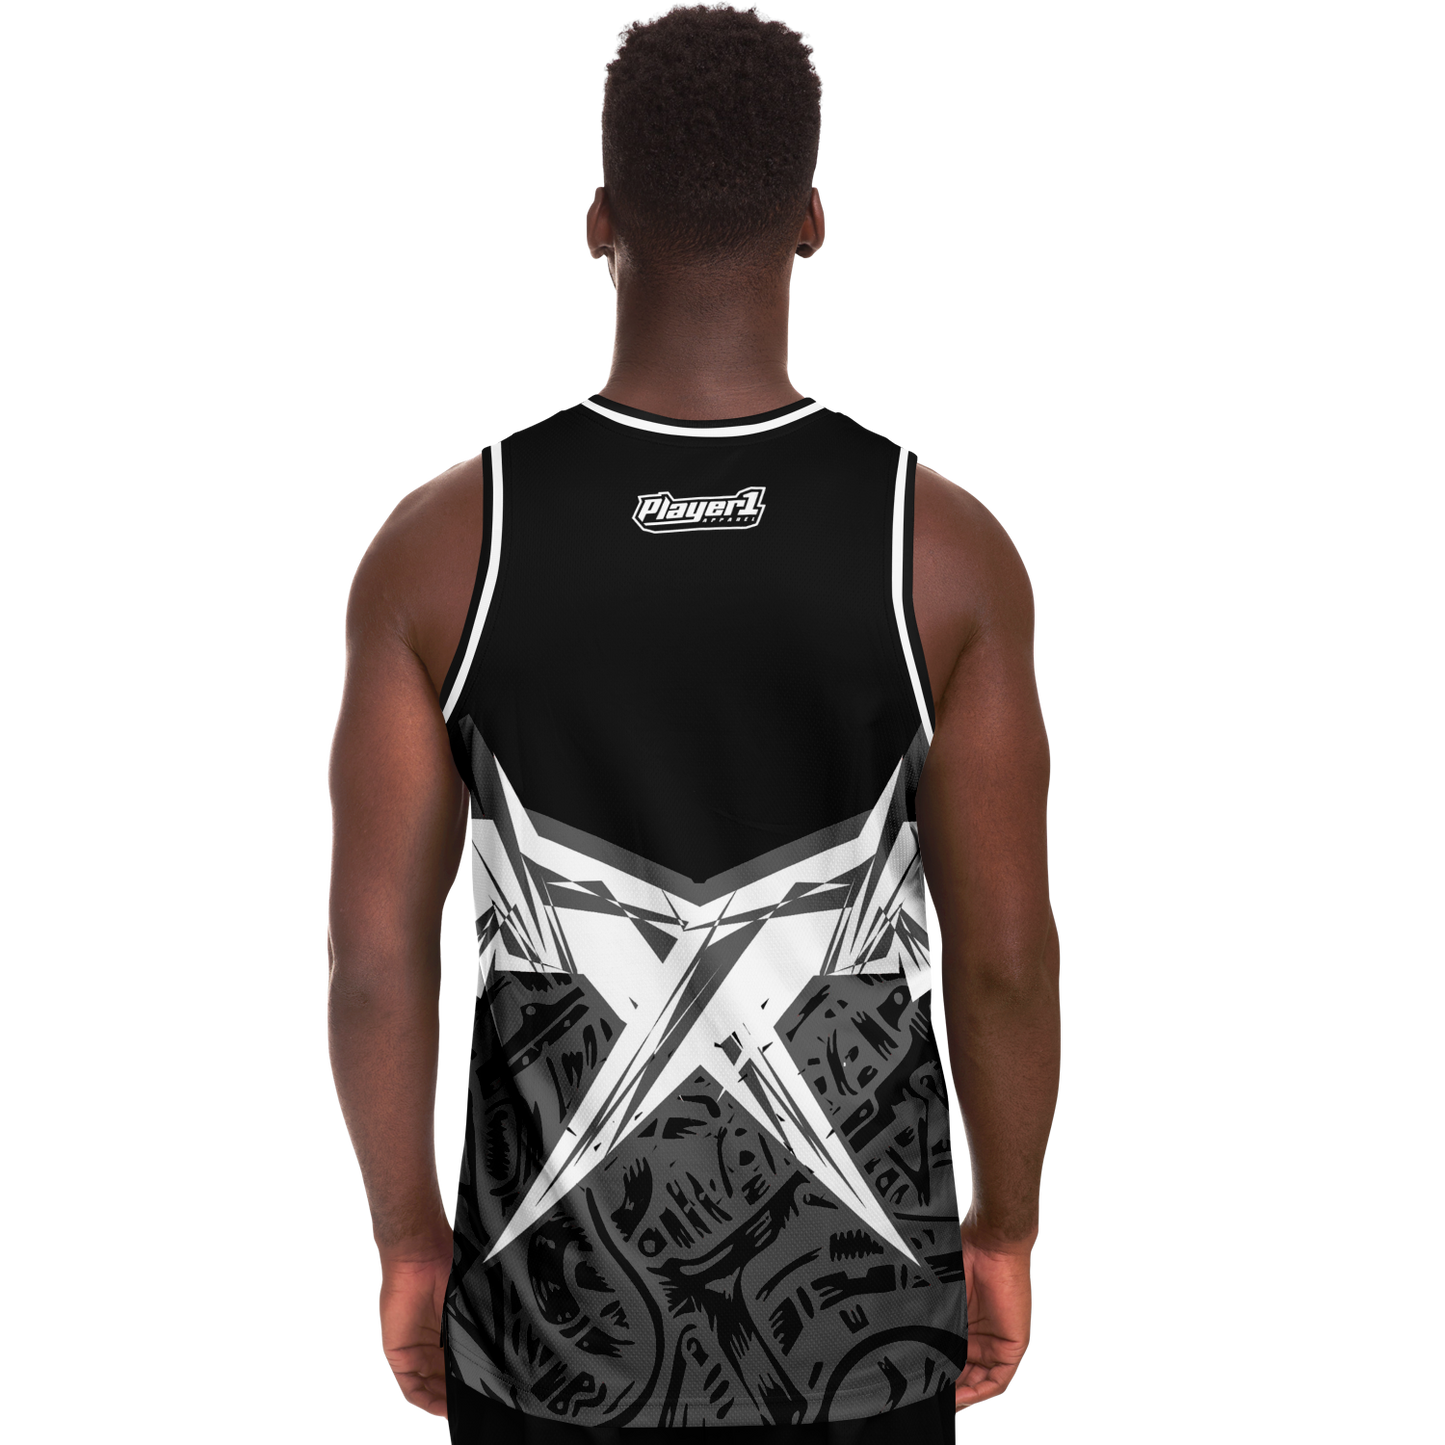 BlackFox Basketball Jersey